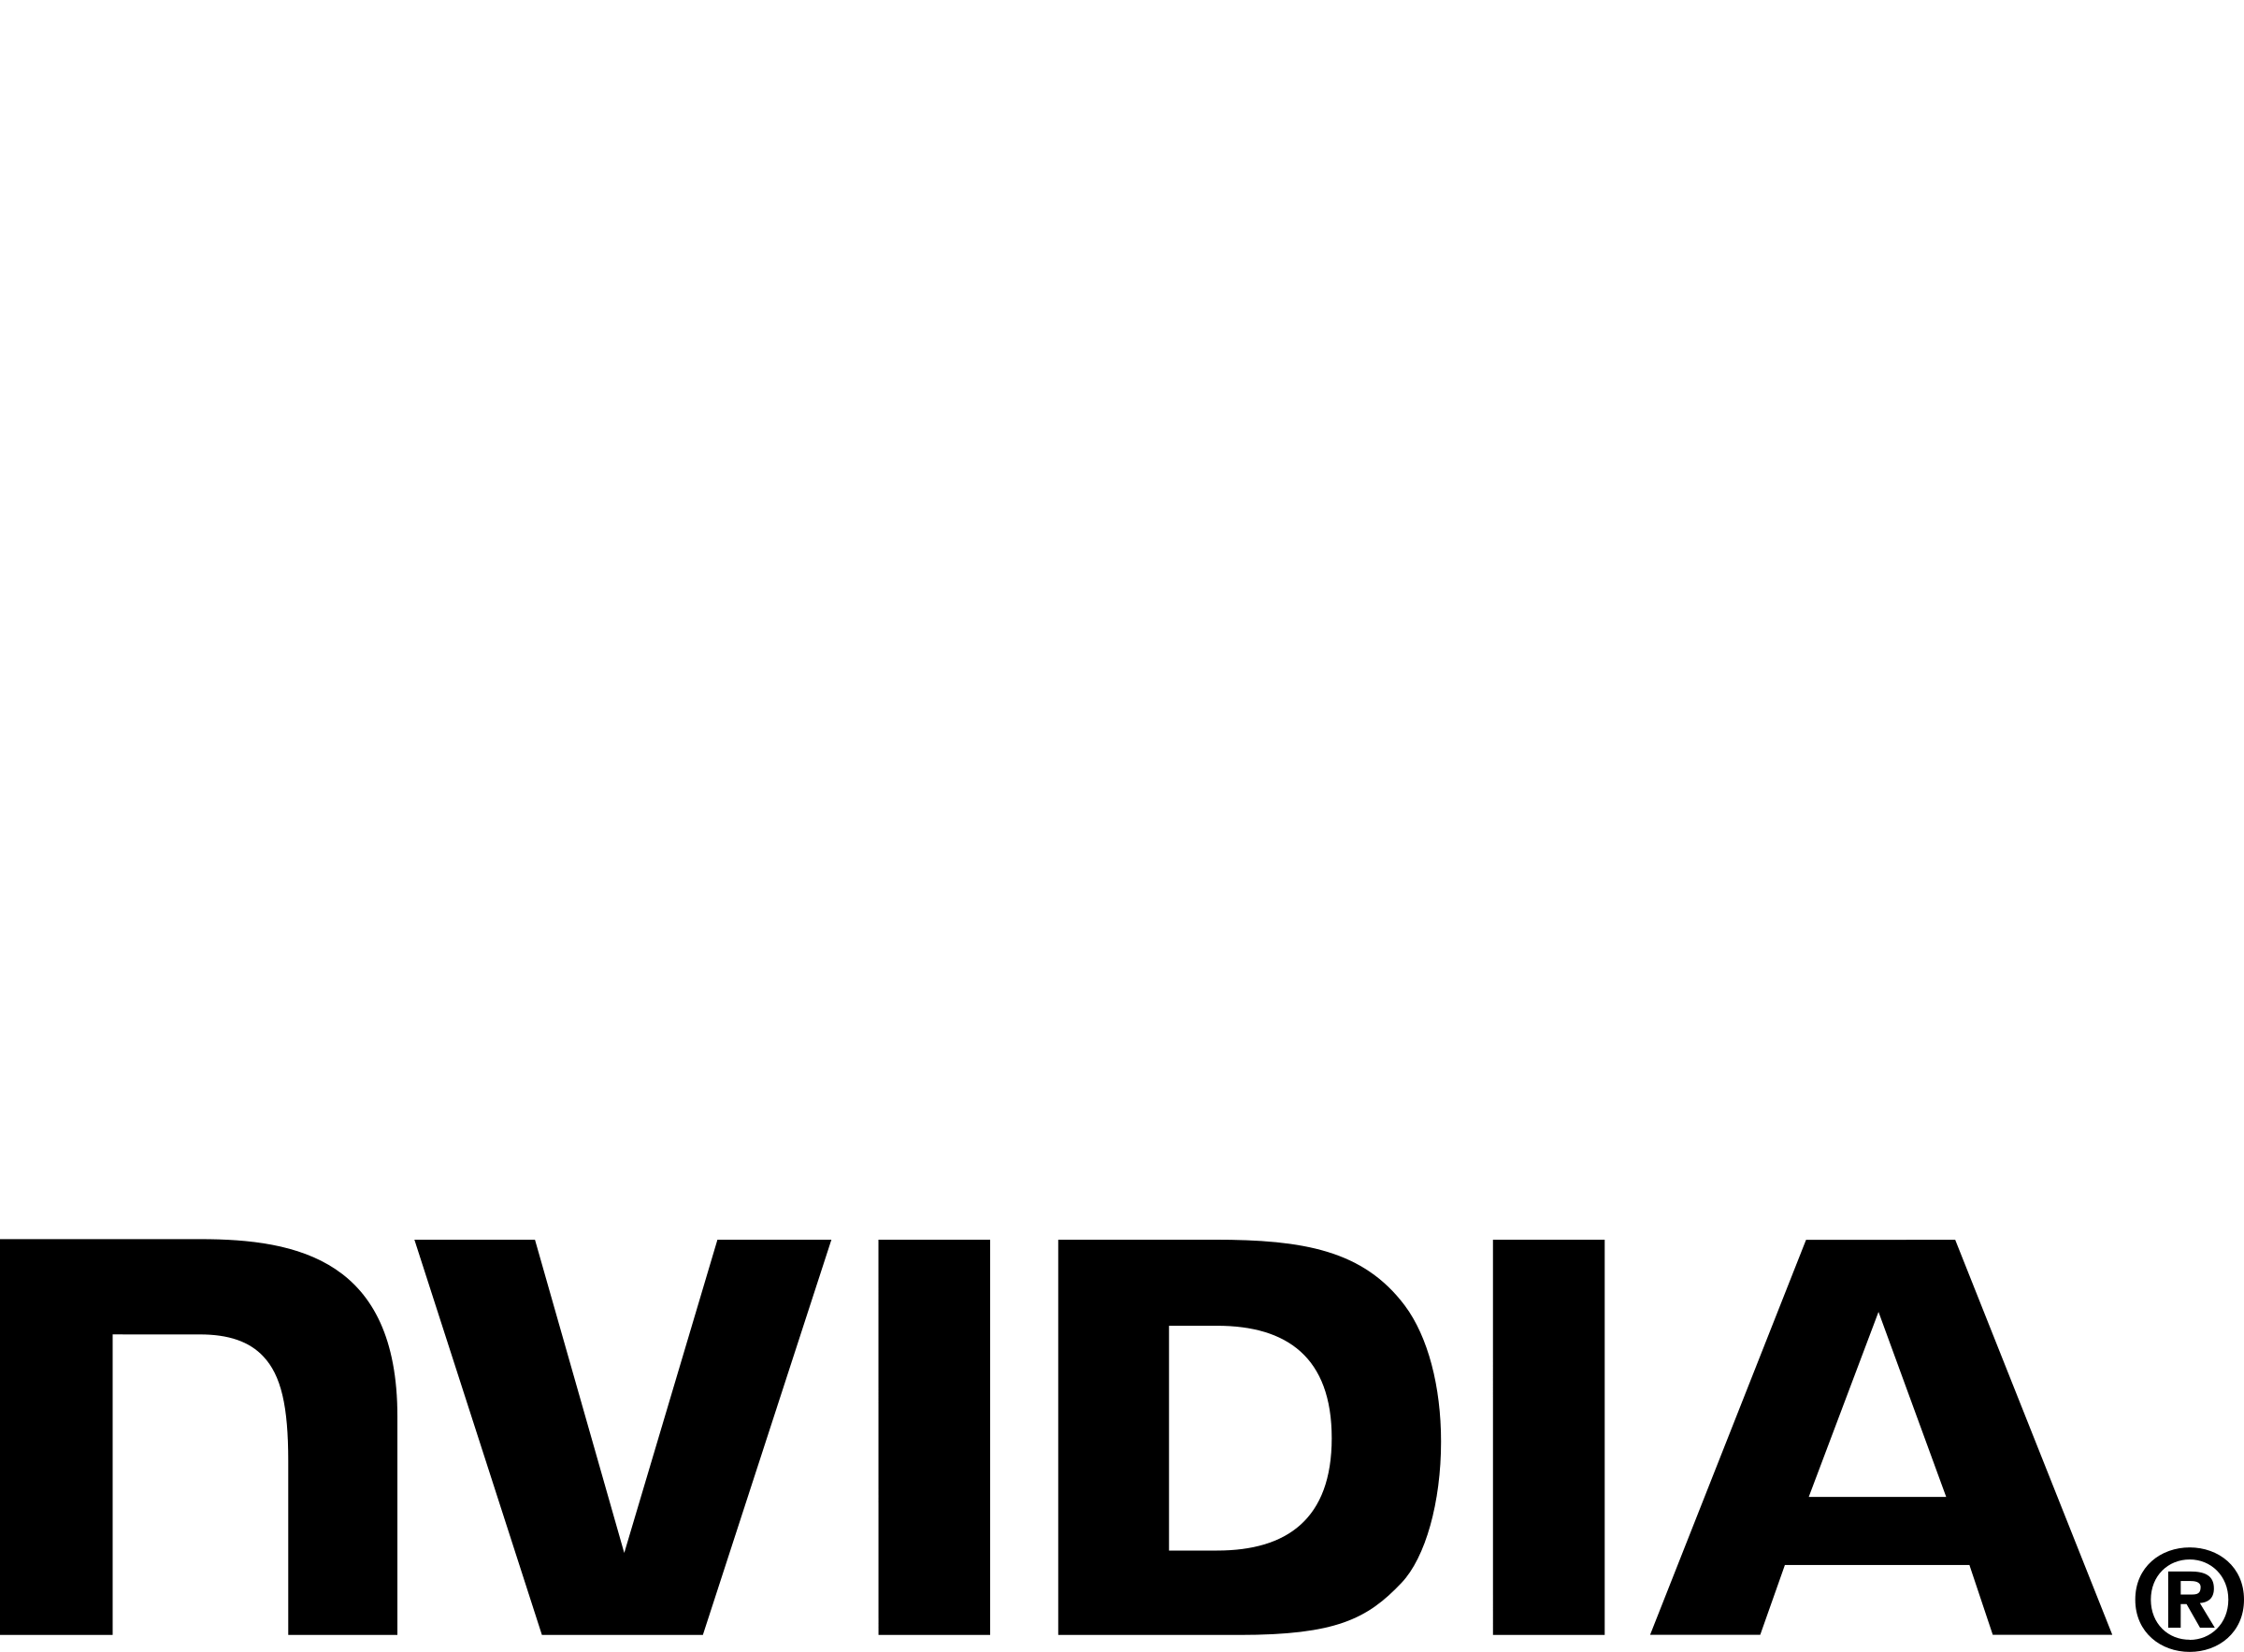 NVIDIA Logo - Nvidia Logo PNG Transparent & SVG Vector - Freebie Supply